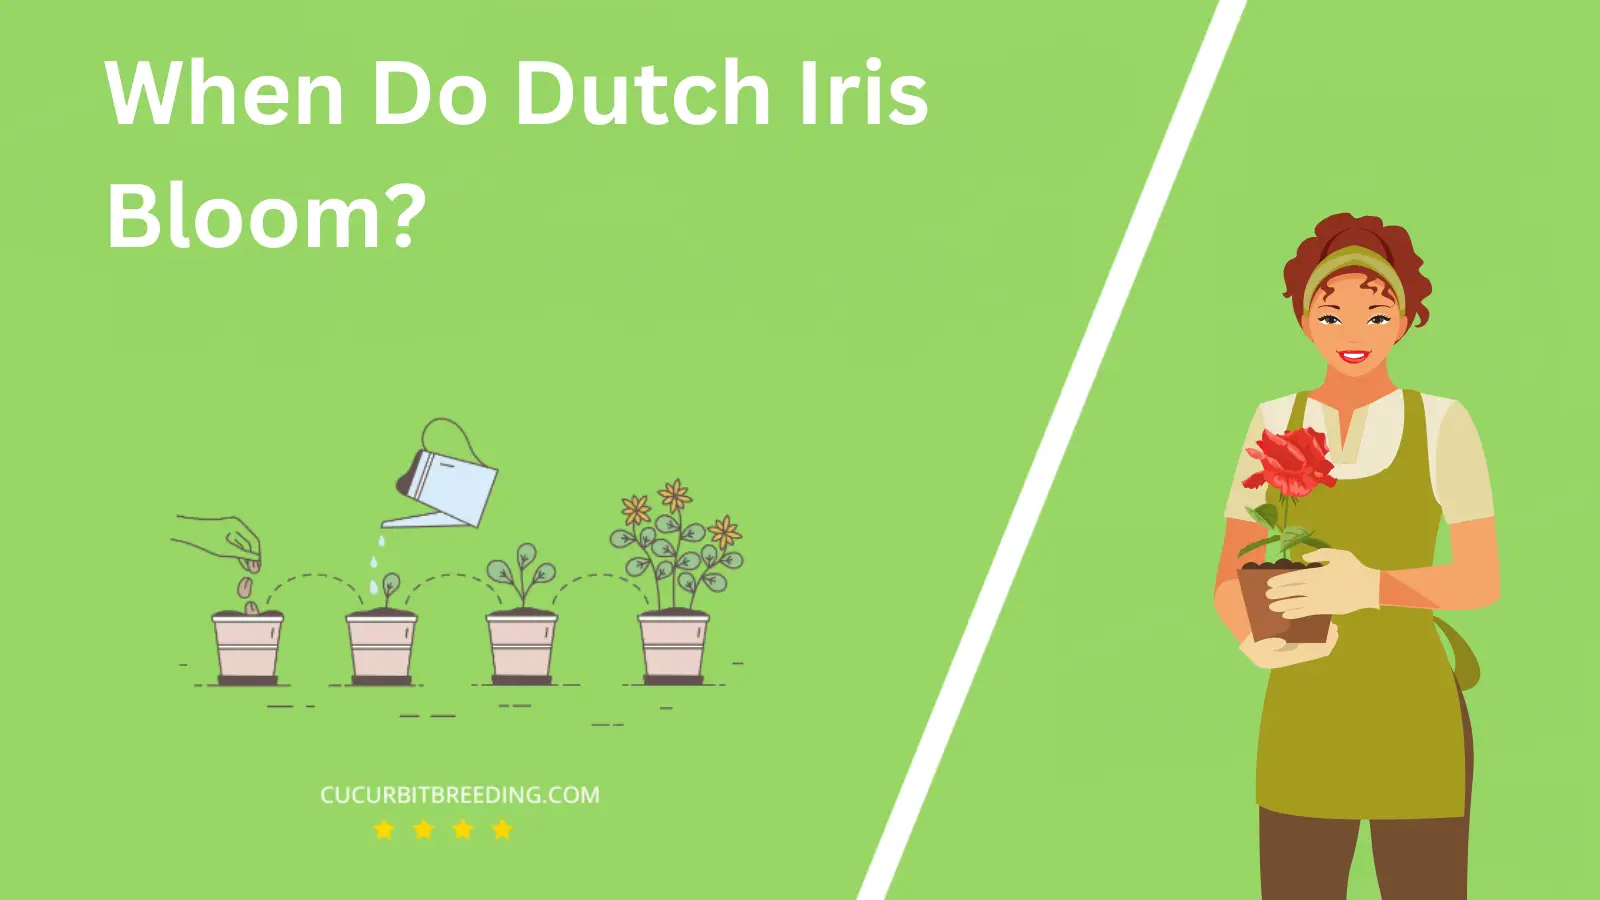 When Do Dutch Iris Bloom?